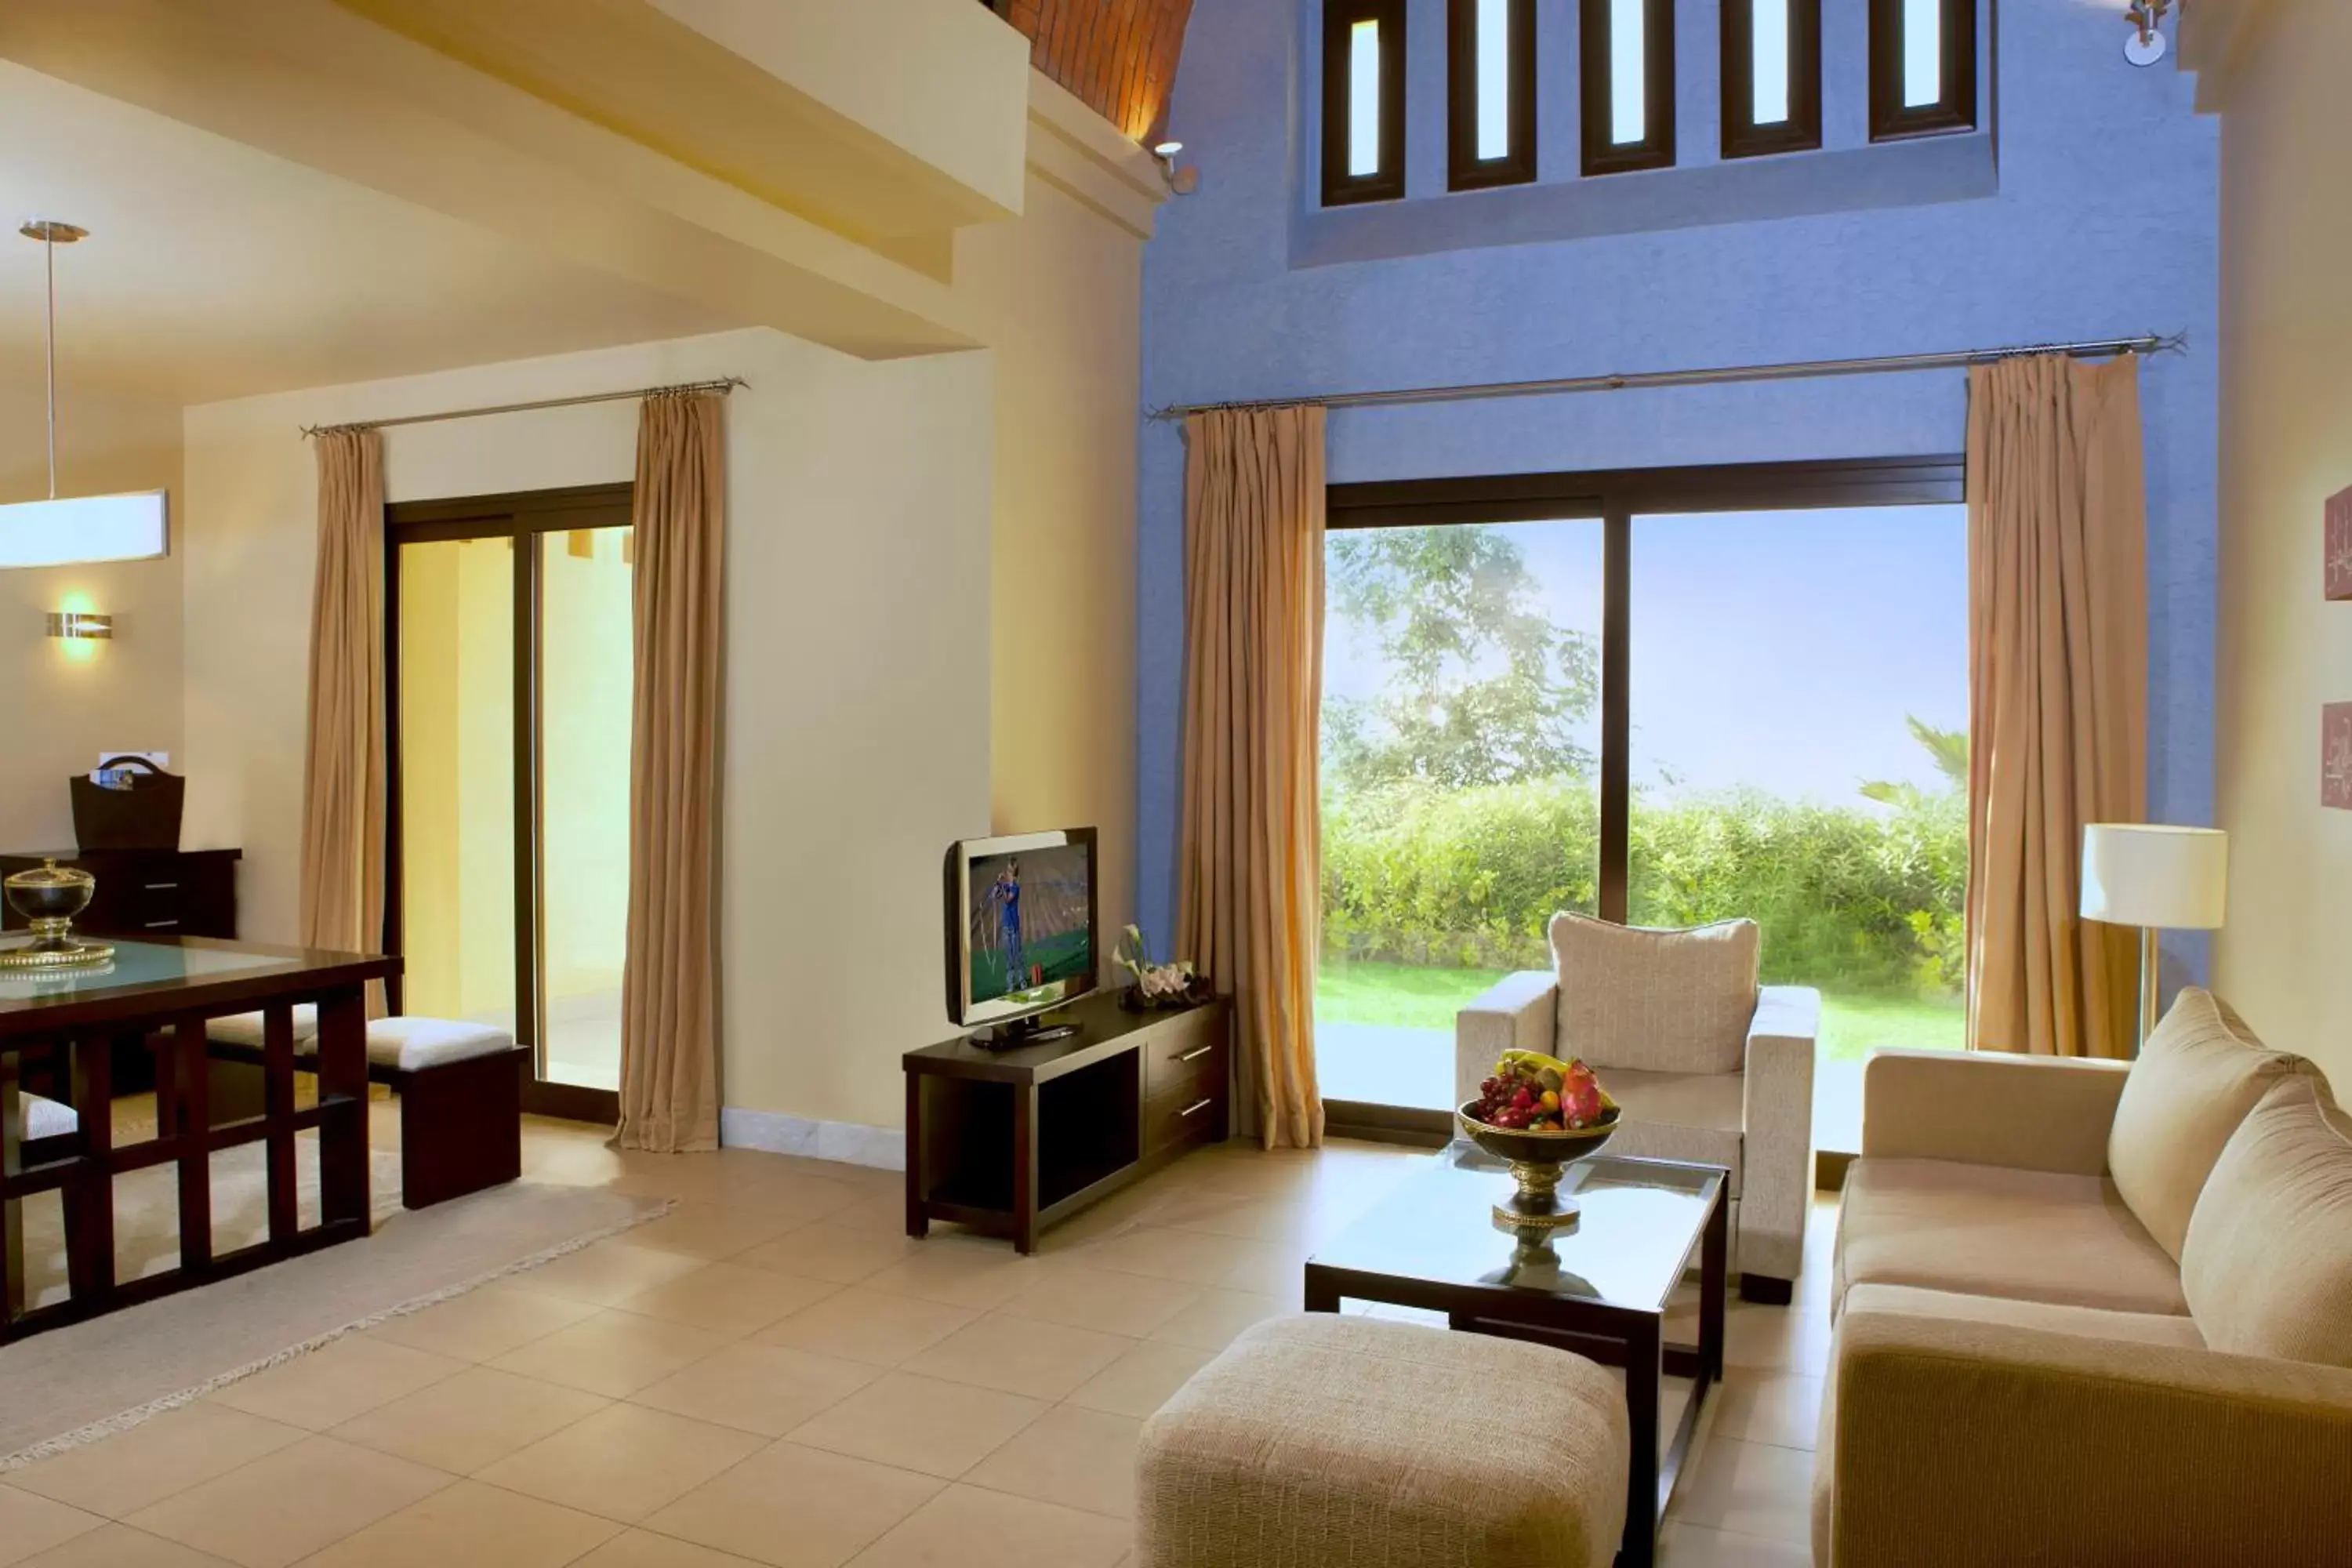 TV and multimedia, Seating Area in The Cove Rotana Resort - Ras Al Khaimah